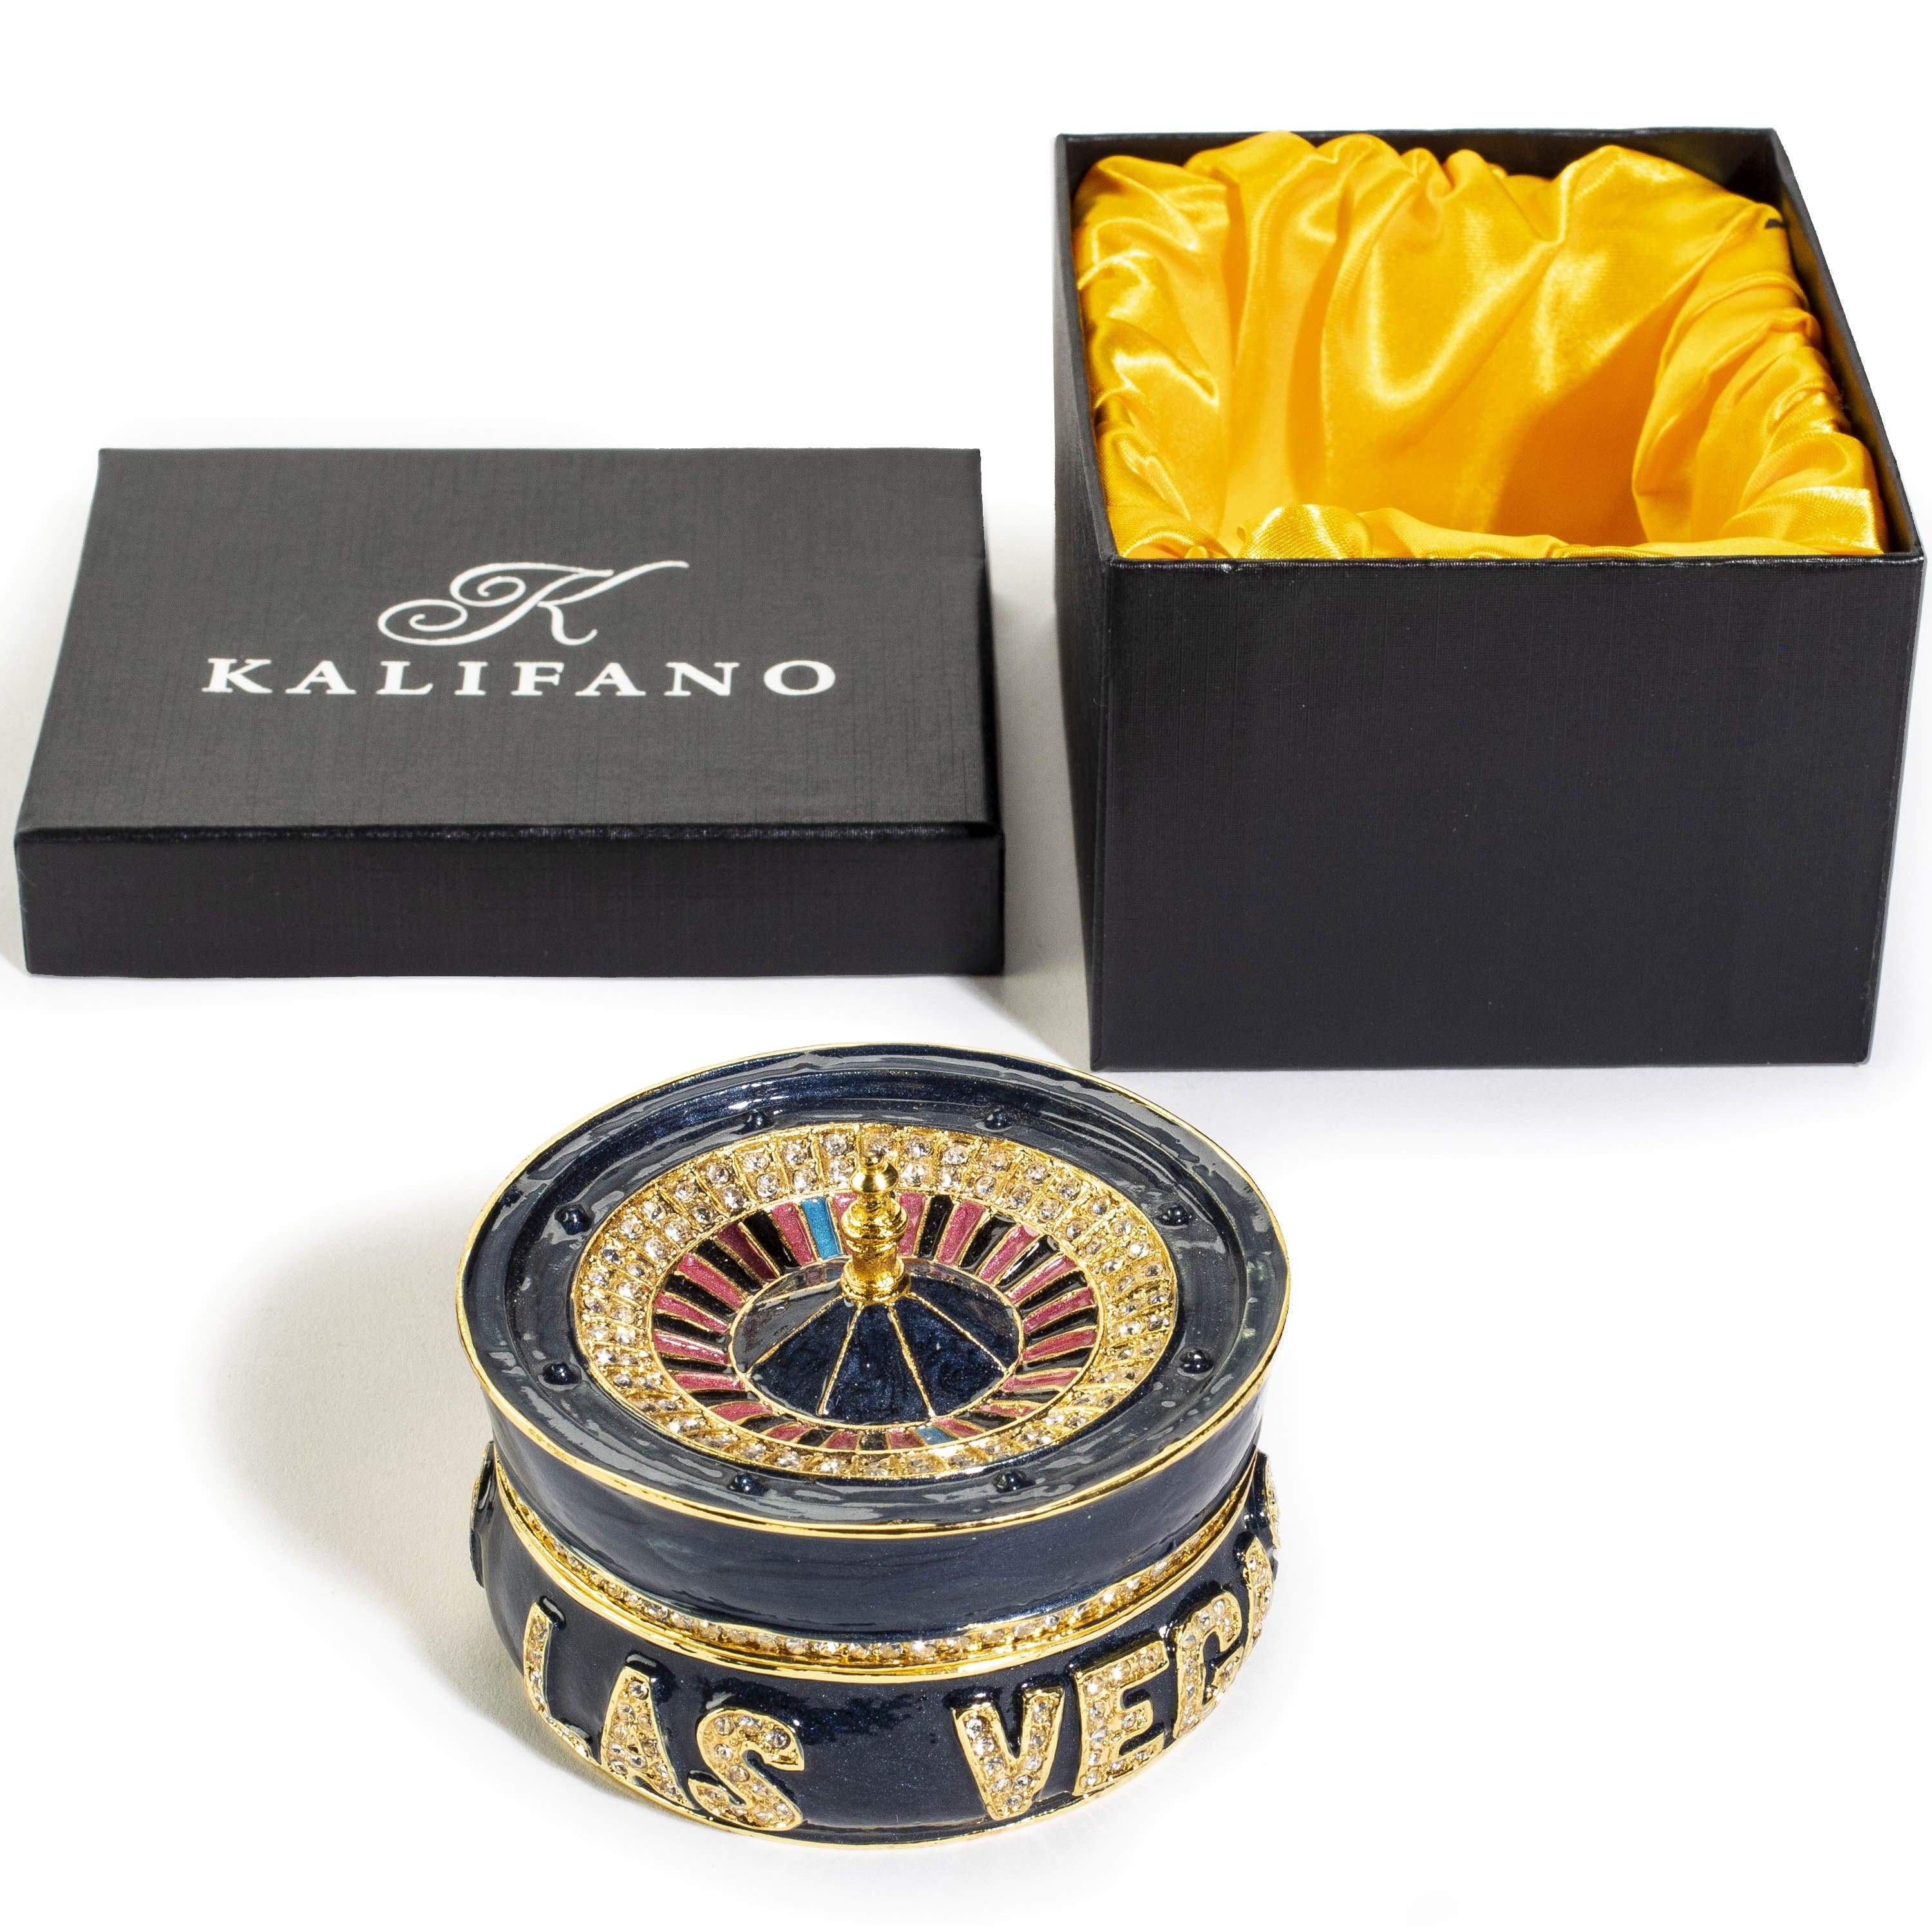 Kalifano Vanity Figurine Roulette Figurine Keepsake Box made with Crystals SVA-110